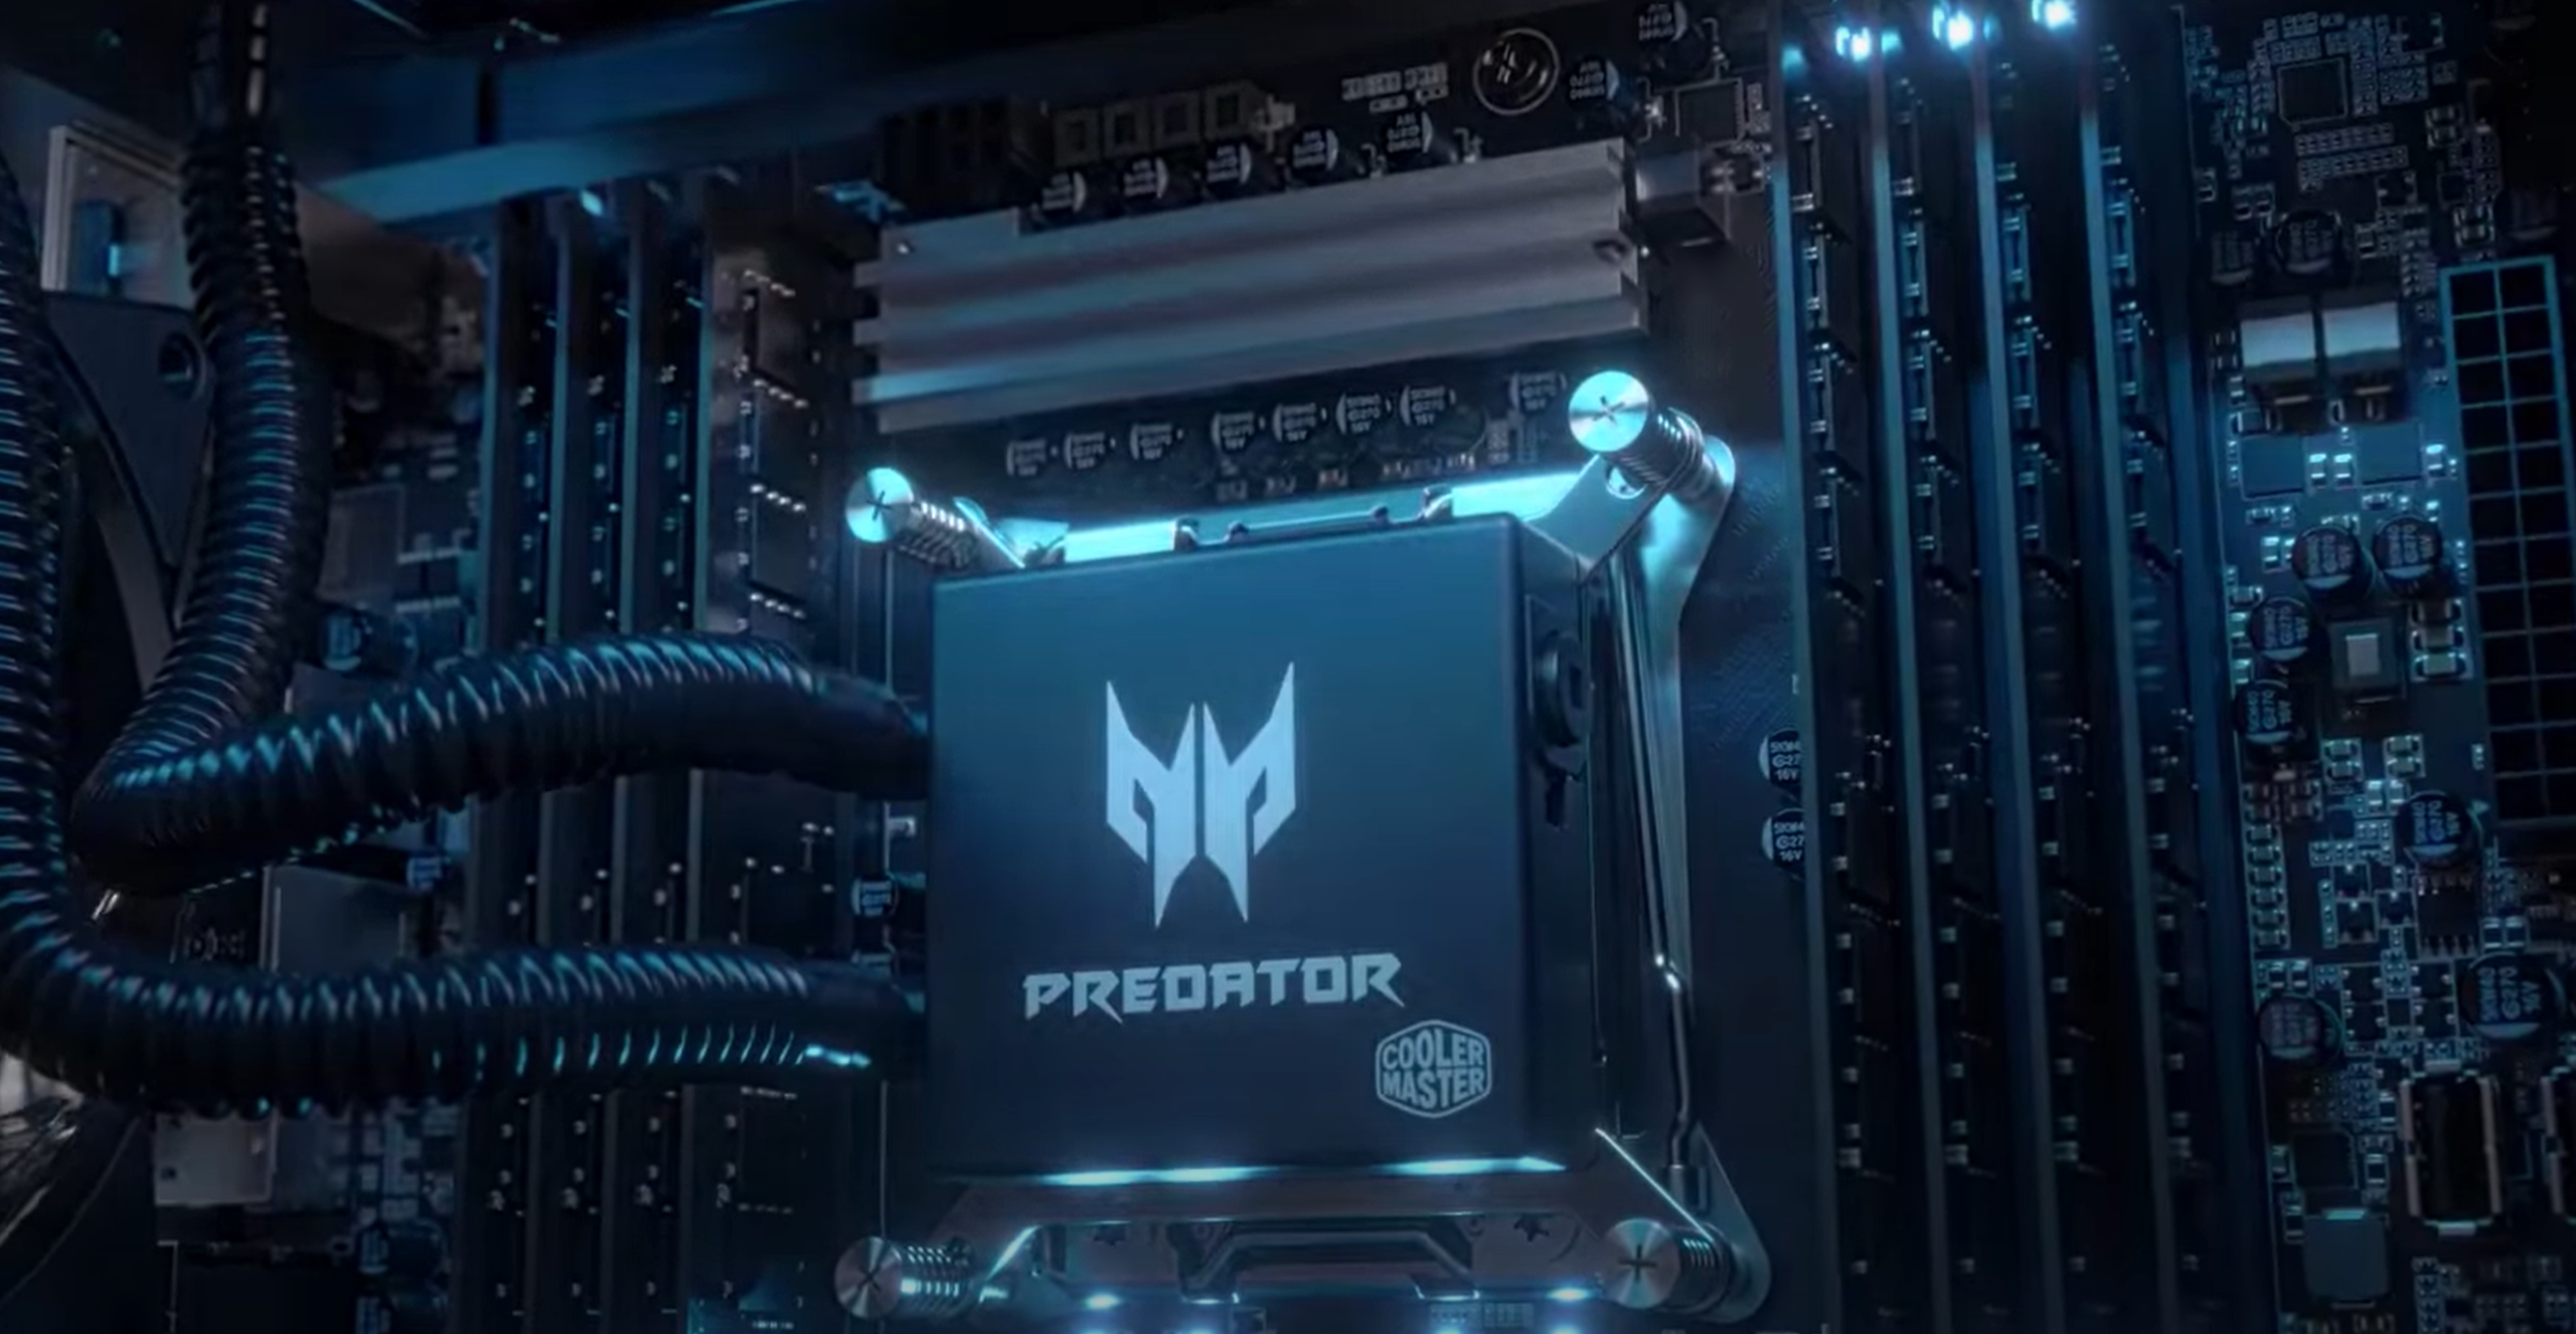 Acer updates its Predator Orion desktops with Intel's 9th-gen processors -  Neowin